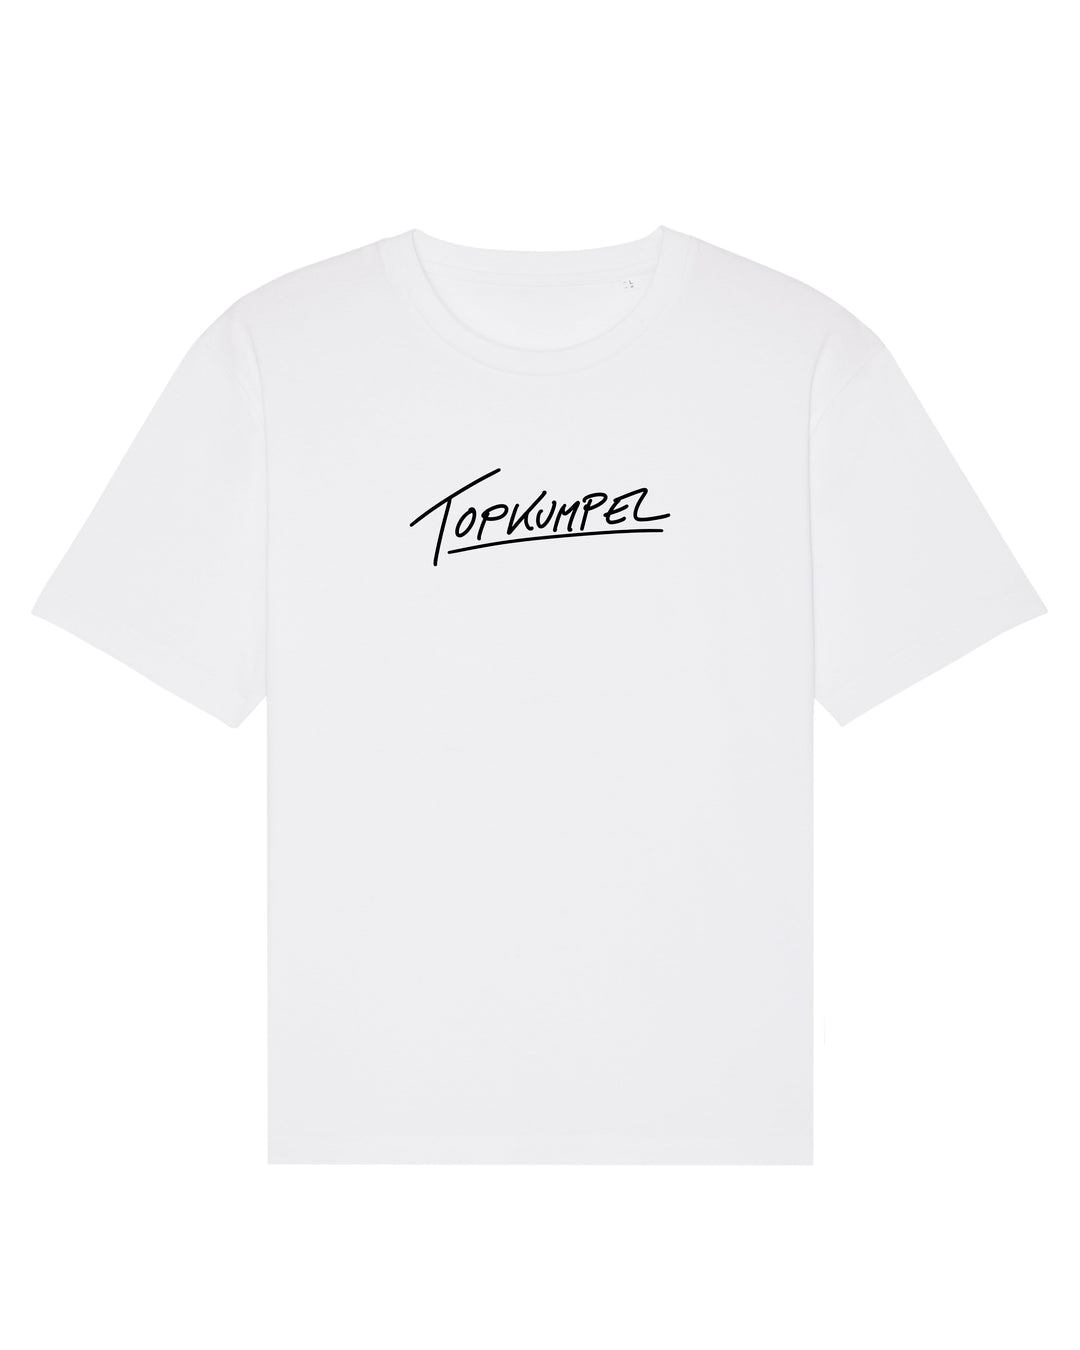 FCKNG SERIOUS - Topkumpel T-Shirt white (Stitched)